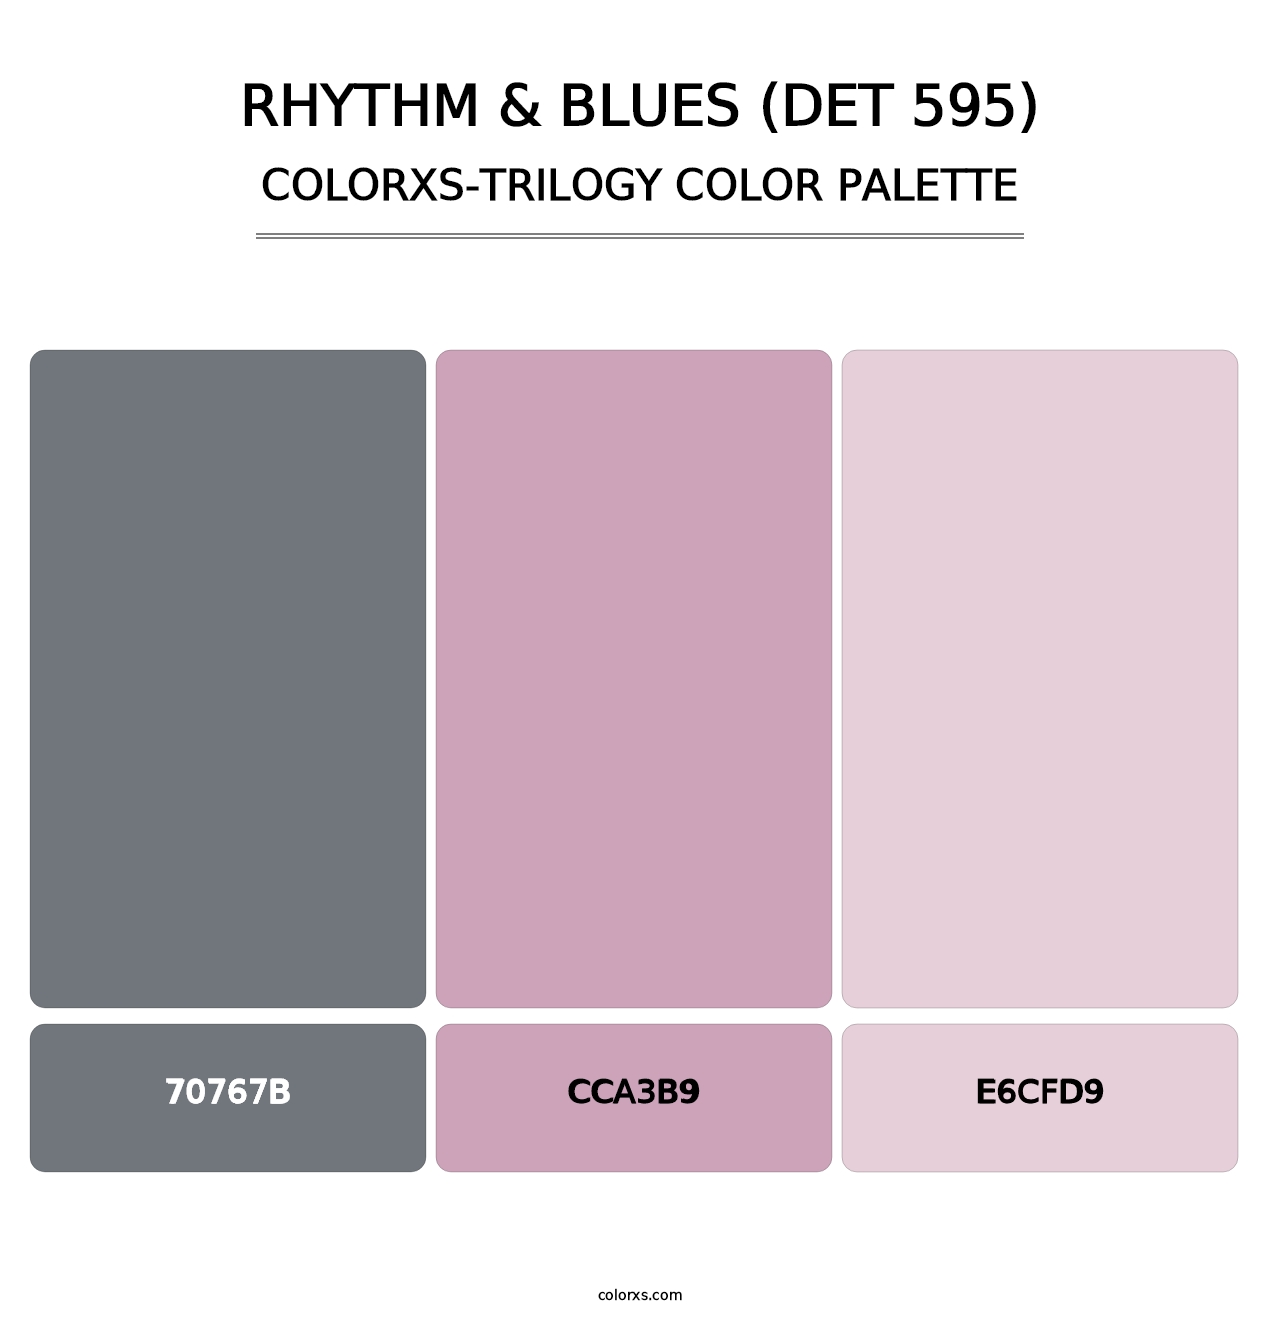 Rhythm & Blues (DET 595) - Colorxs Trilogy Palette